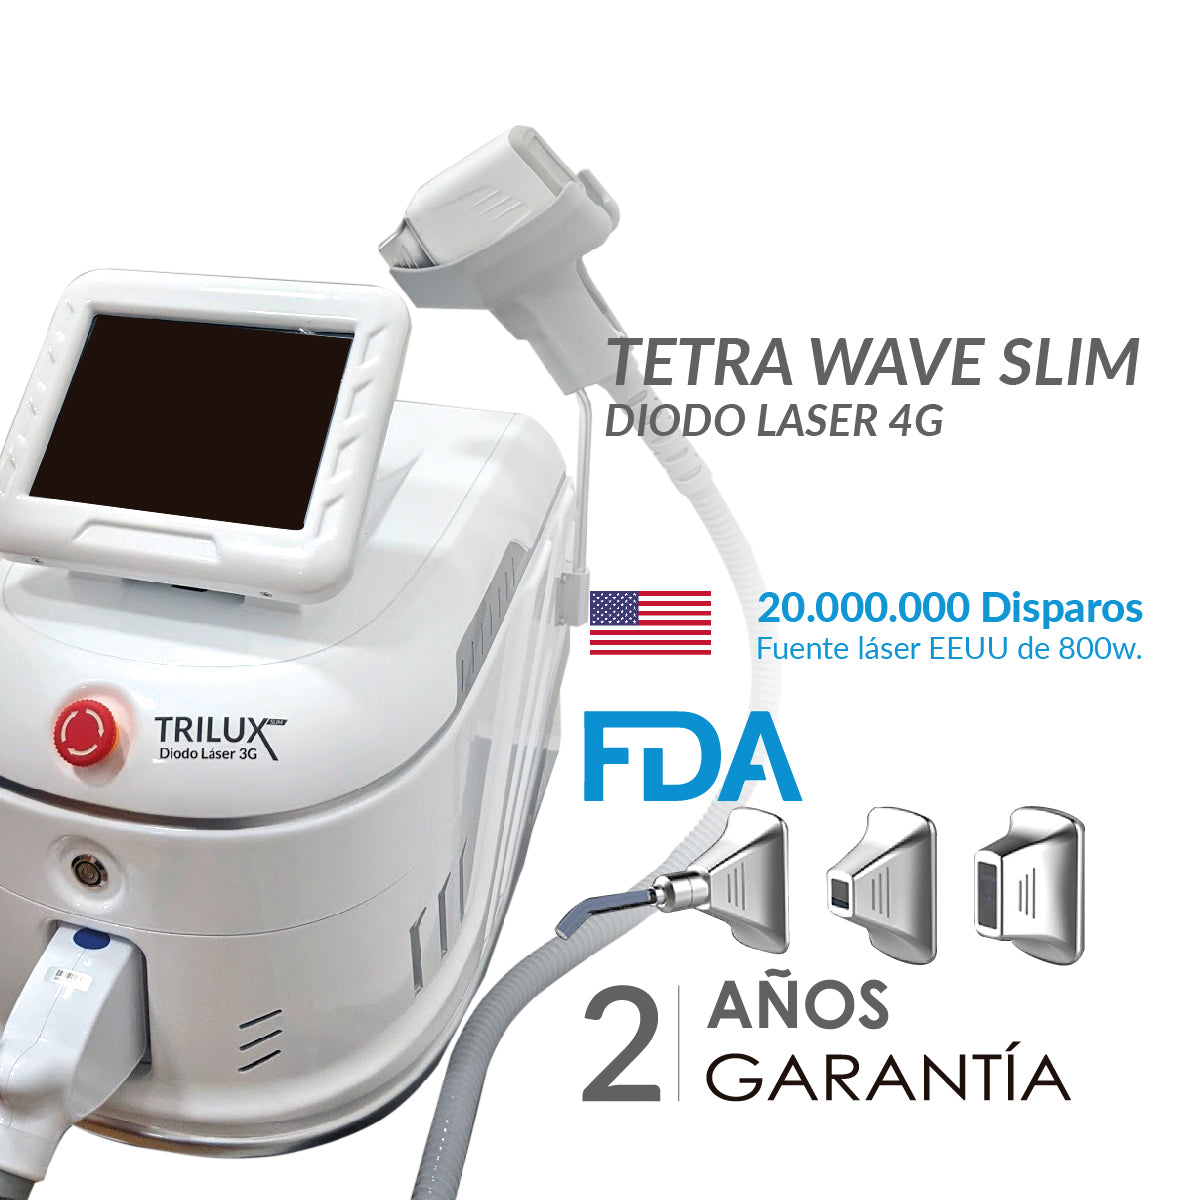 Tetra Wave Slim Diode Laser 4G